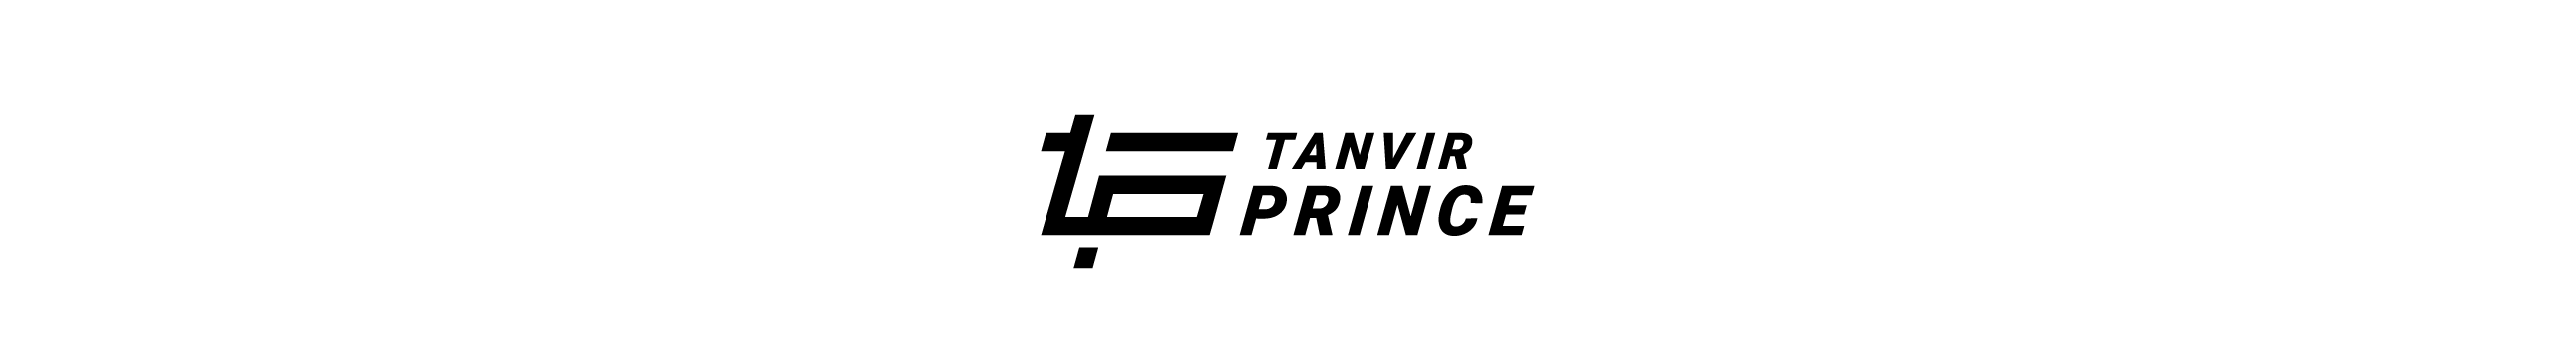 Tanvir Prince's profile banner